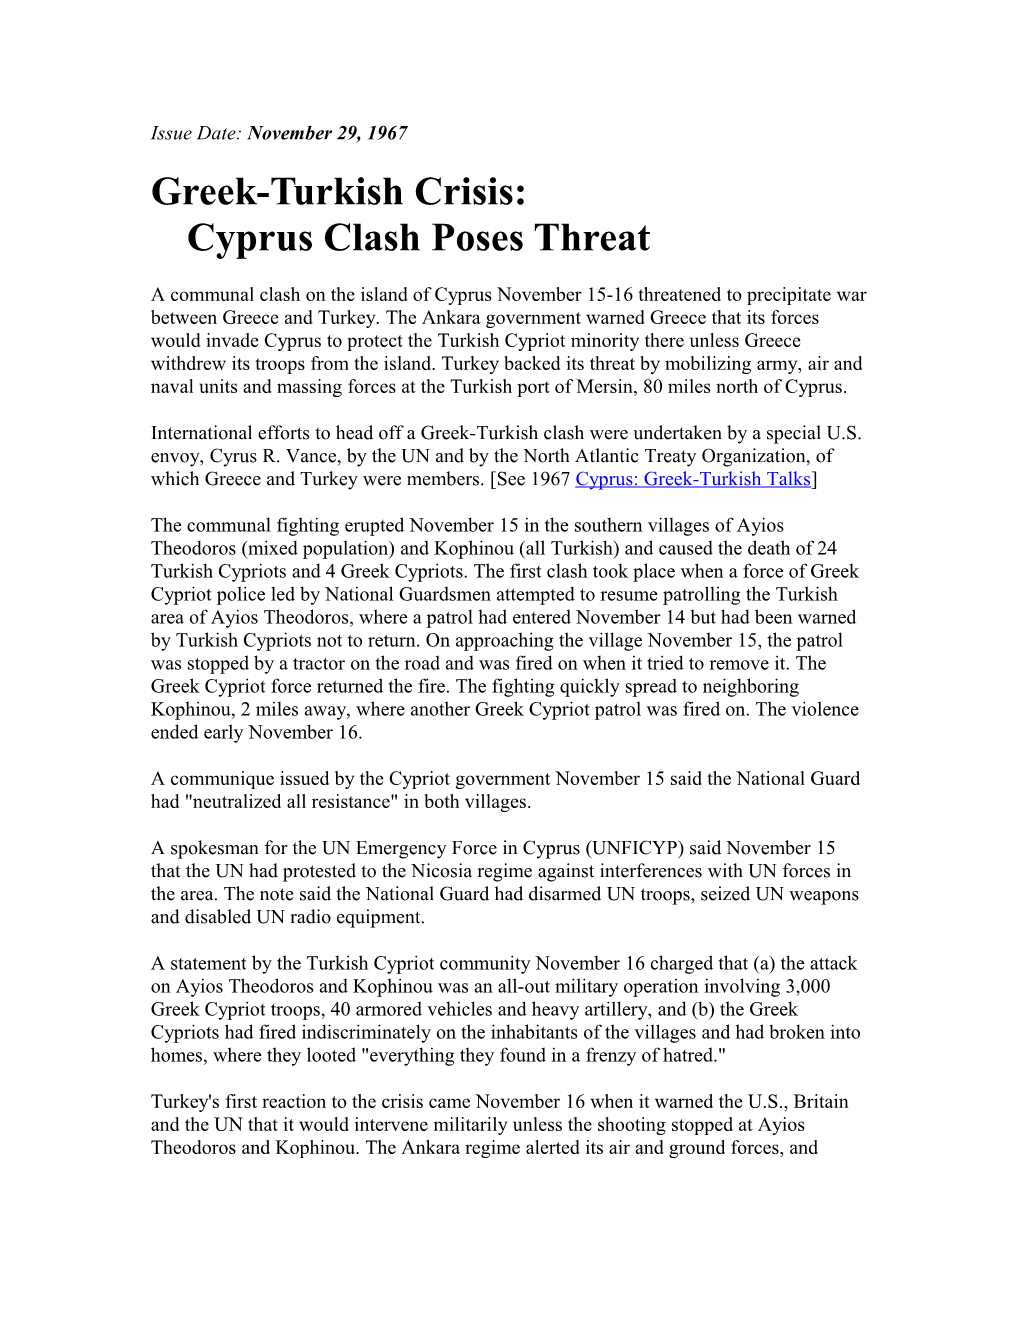 Greek-Turkish Crisis:Cyprus Clash Poses Threat